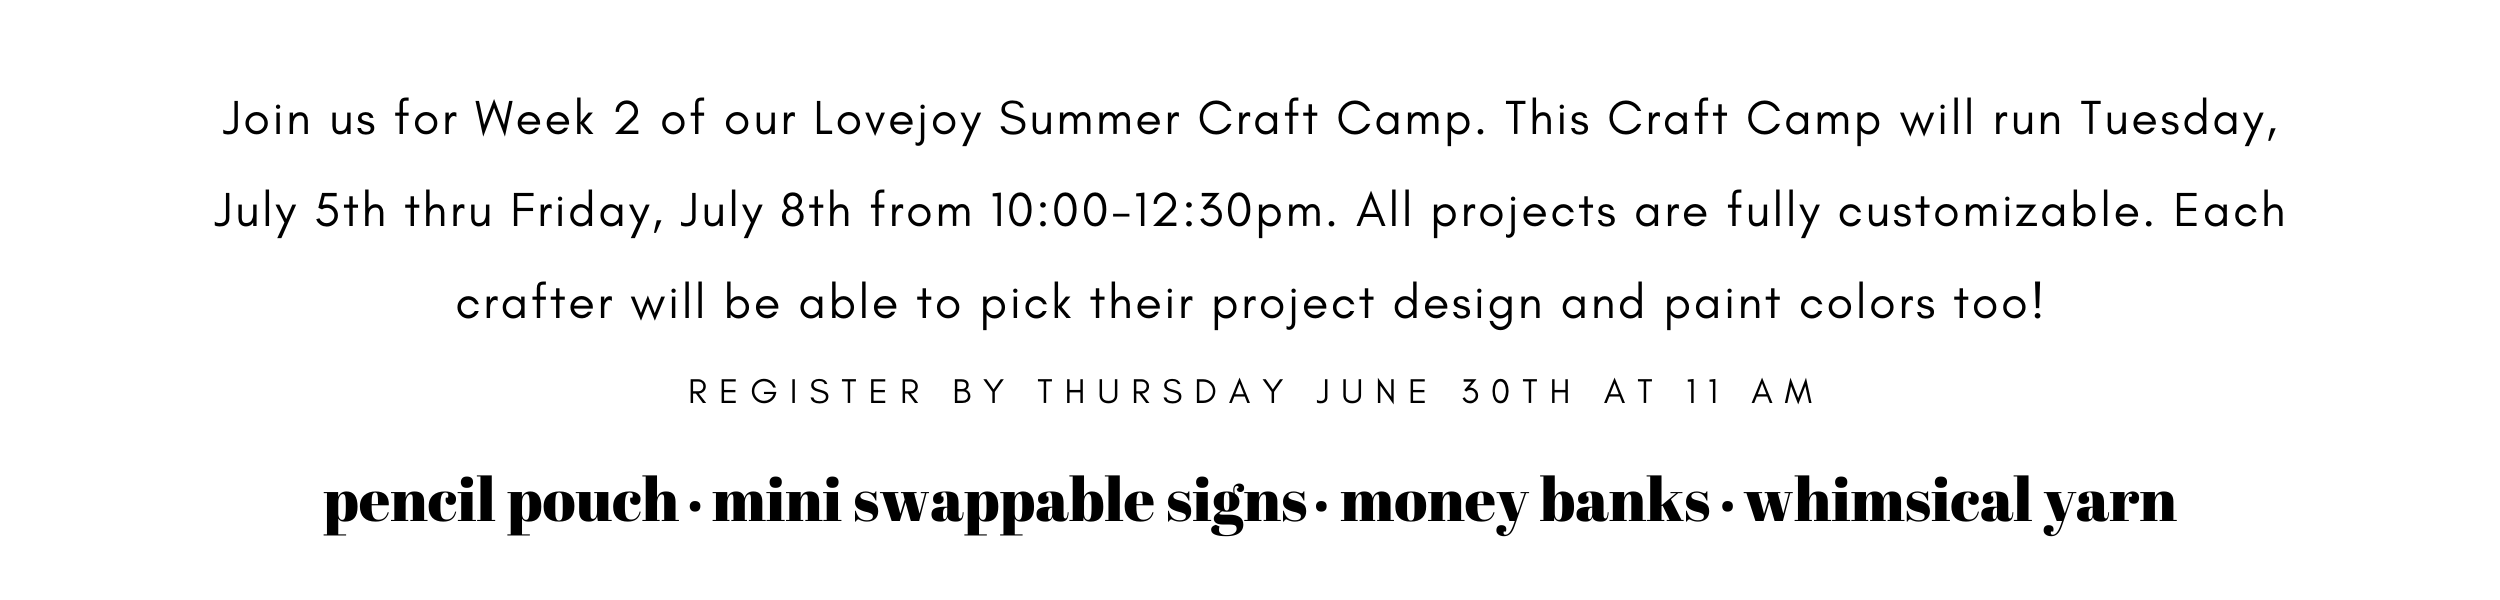 Summer Craft Camp Week 2 | Lovejoy Workshop